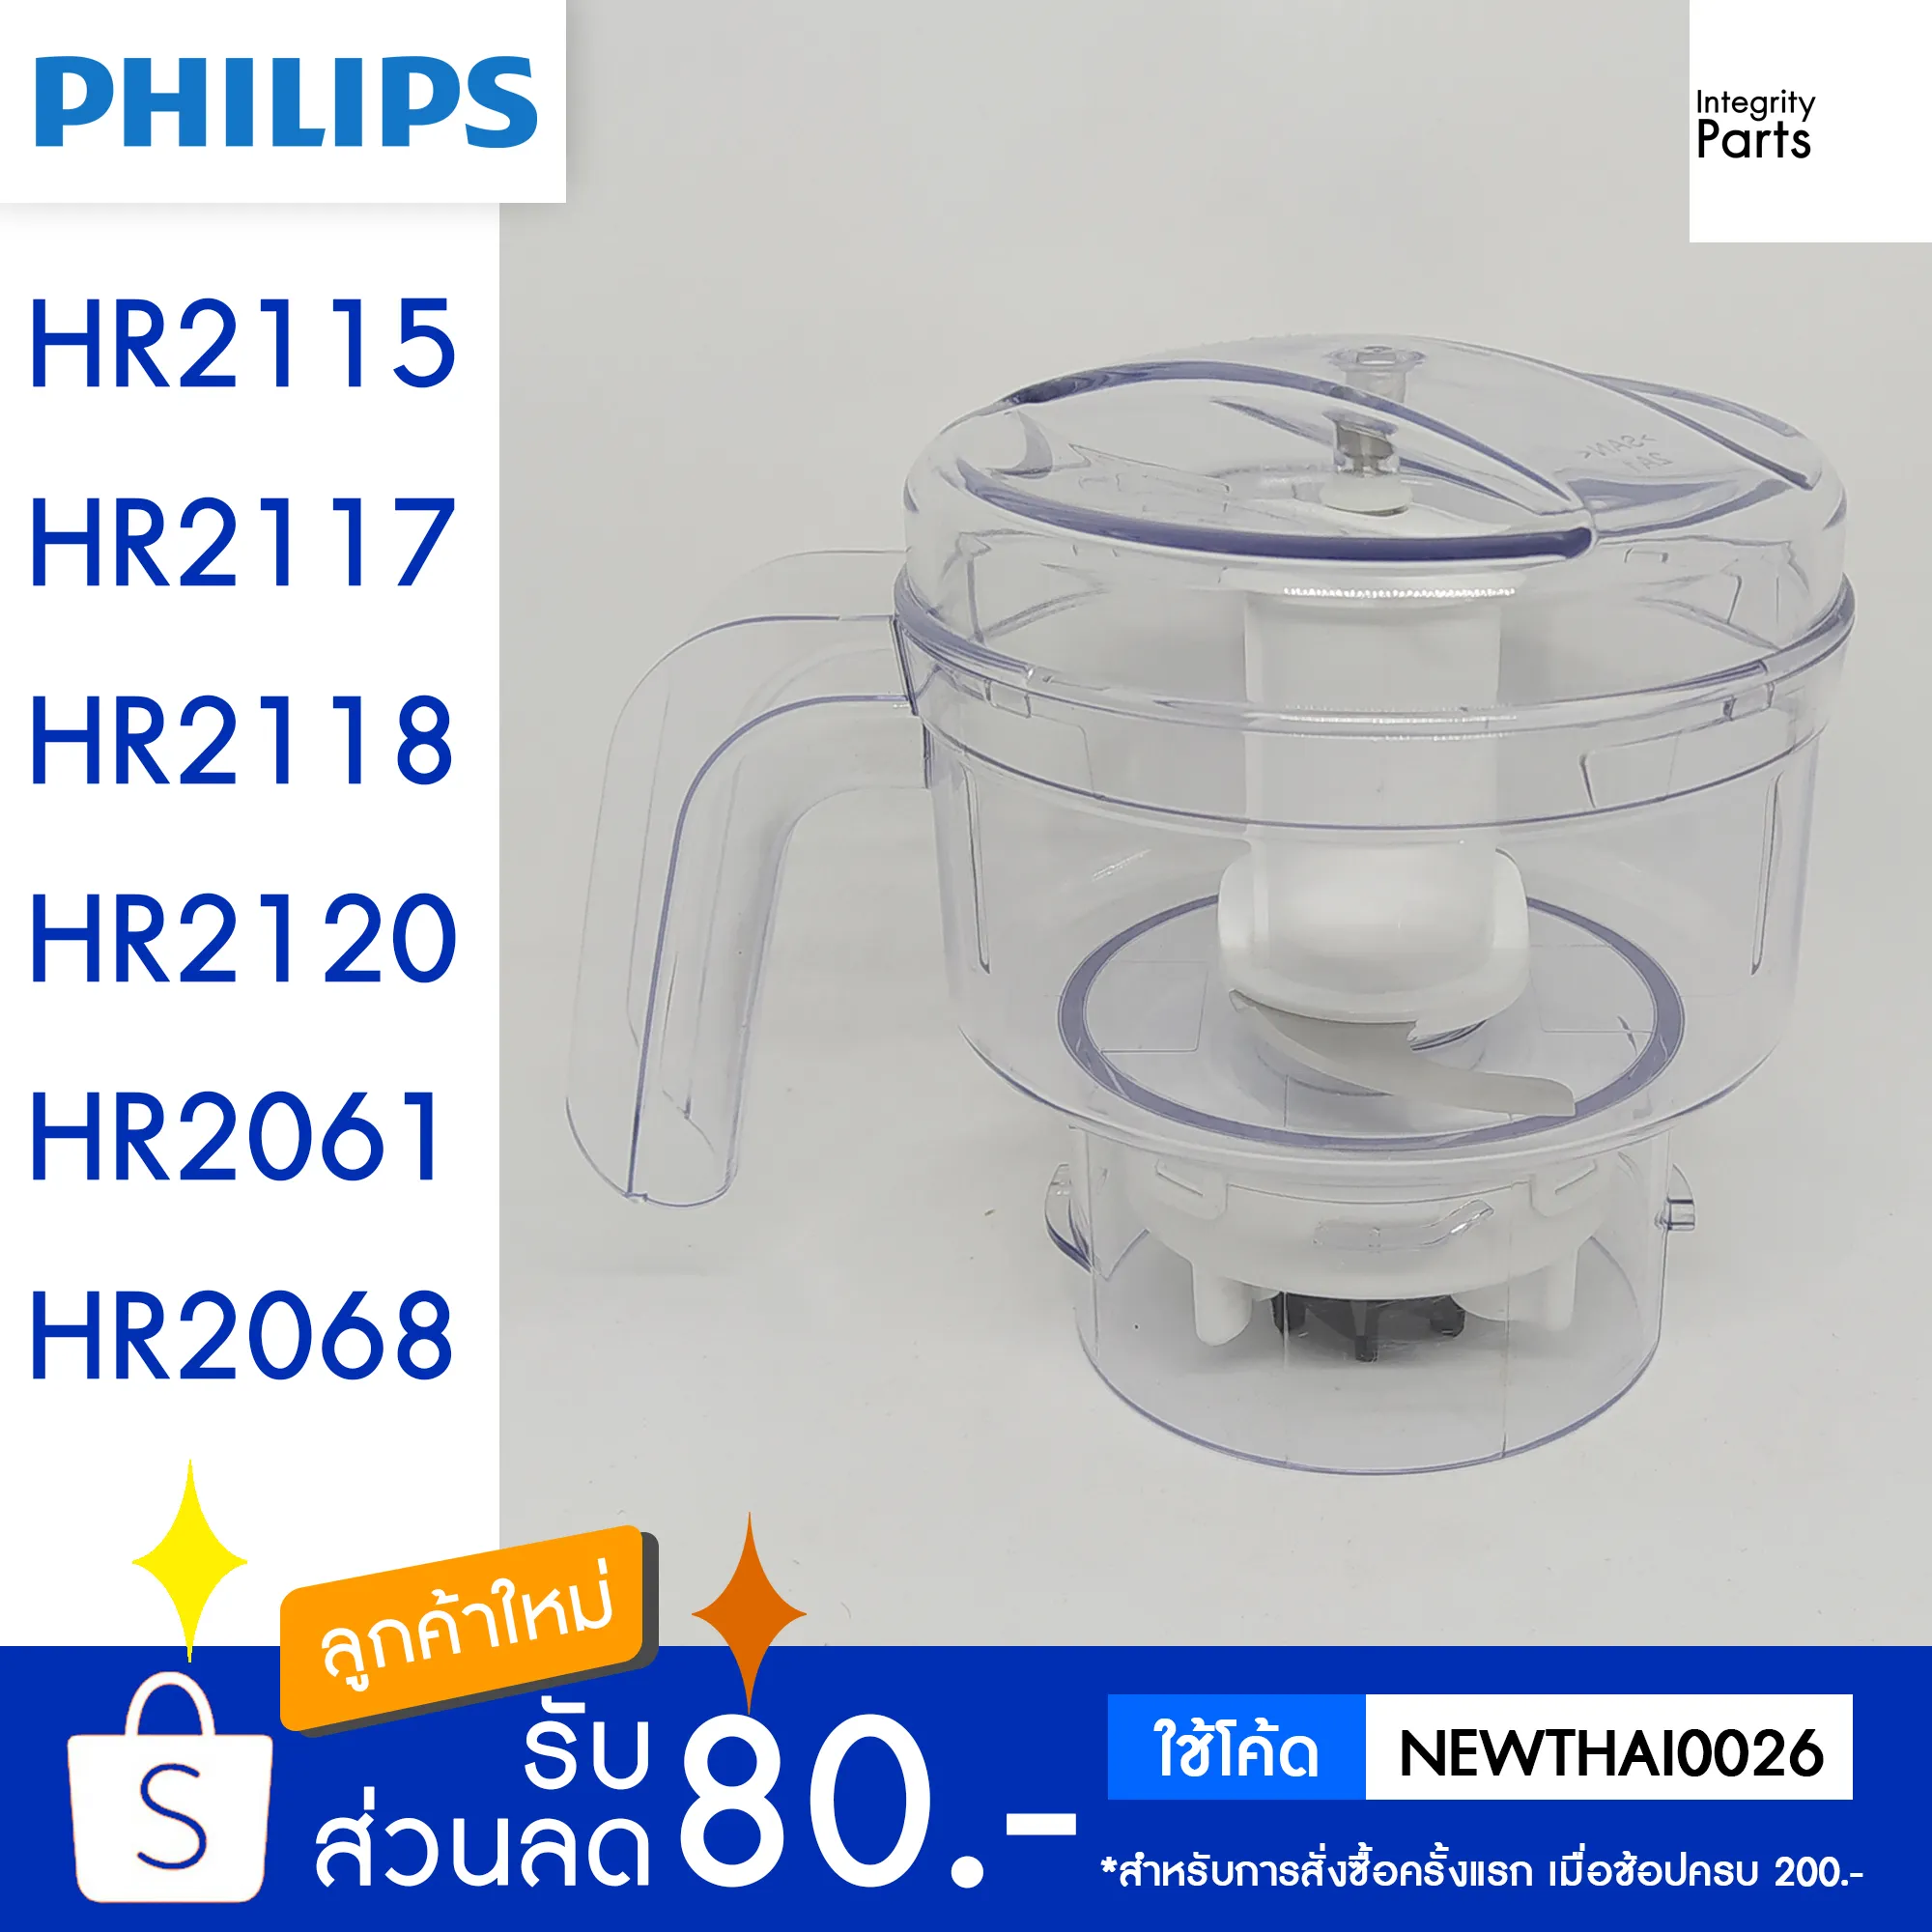 Philips ชุด โถบดเนื้อ แกน ใบมีด โถ อะไหล่ เครื่องปั่น ใหม่ แท้ HR2115, HR2117, HR2118, HR2120, HR2061, HR2068